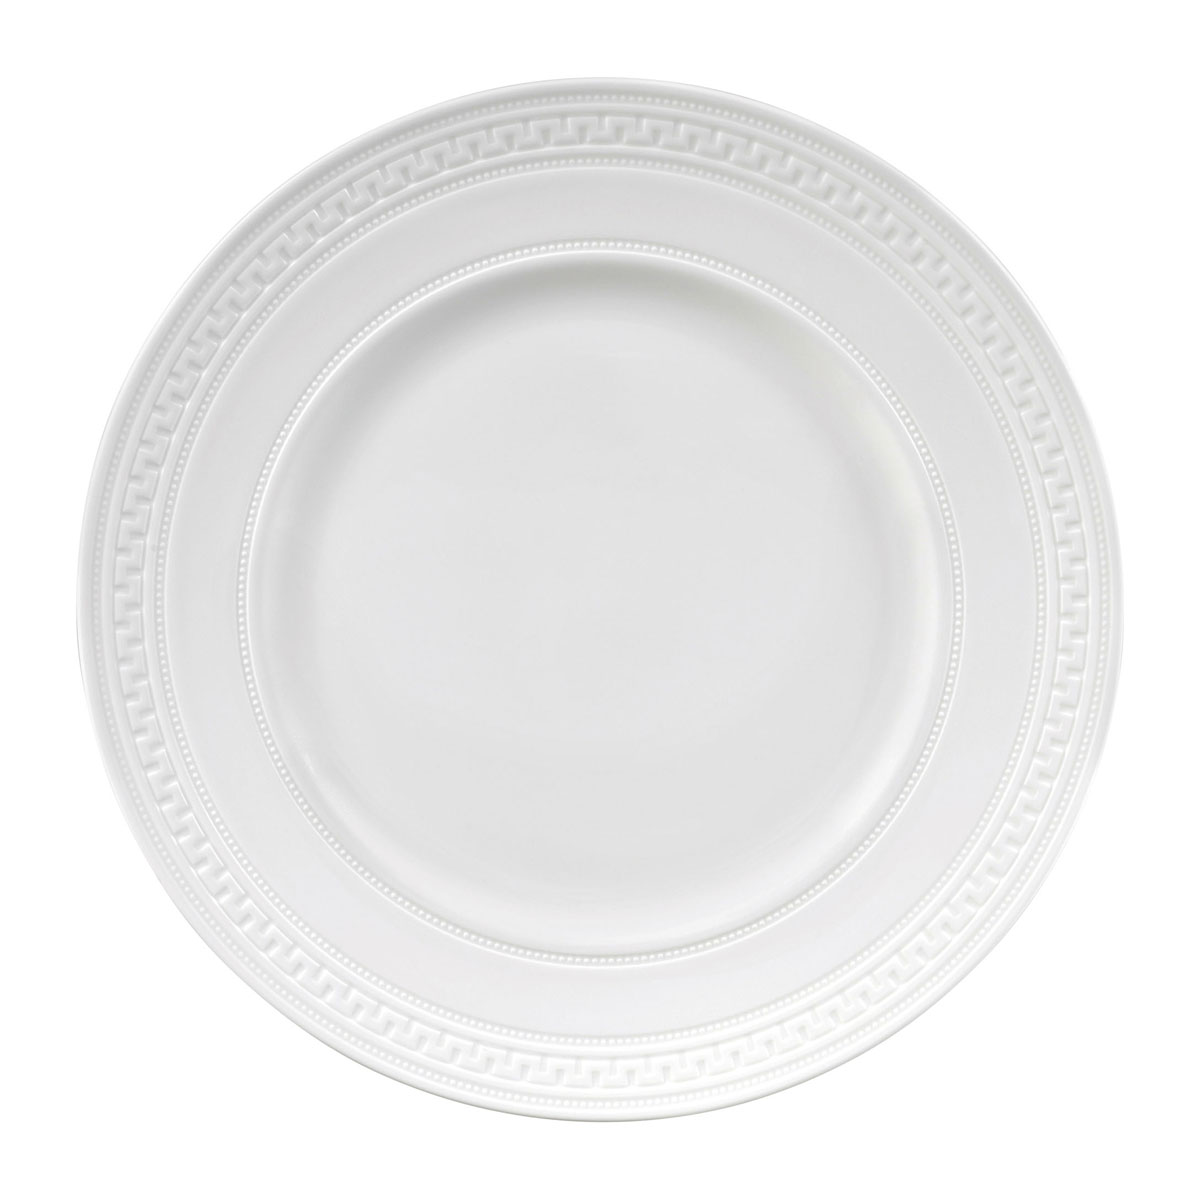 Тарелка обеденная Wedgwood Intaglio 27 см тарелка обеденная wedgwood arris 28 см